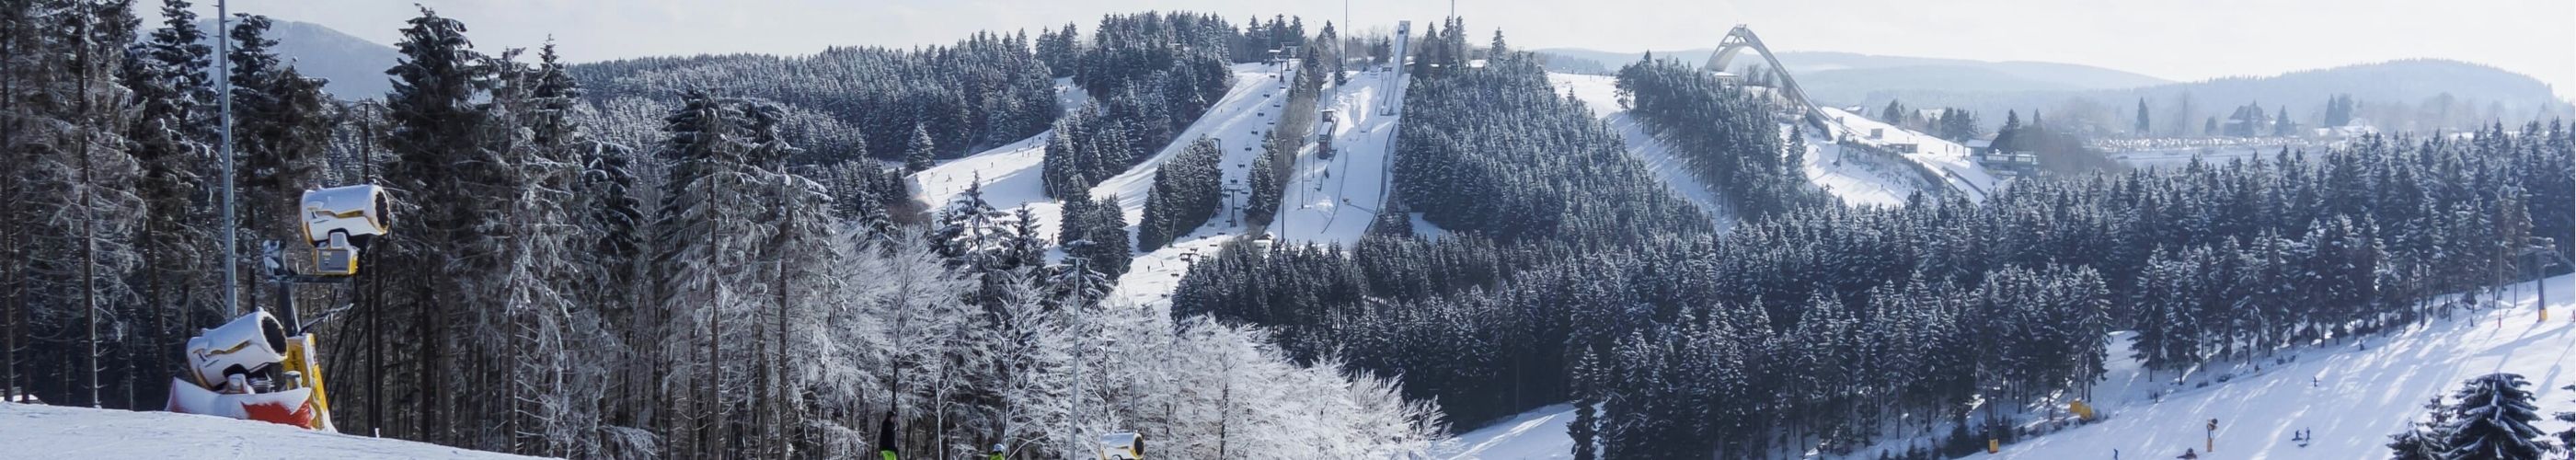 Winter-Panorama Skigebiet Willingen im Sauerland